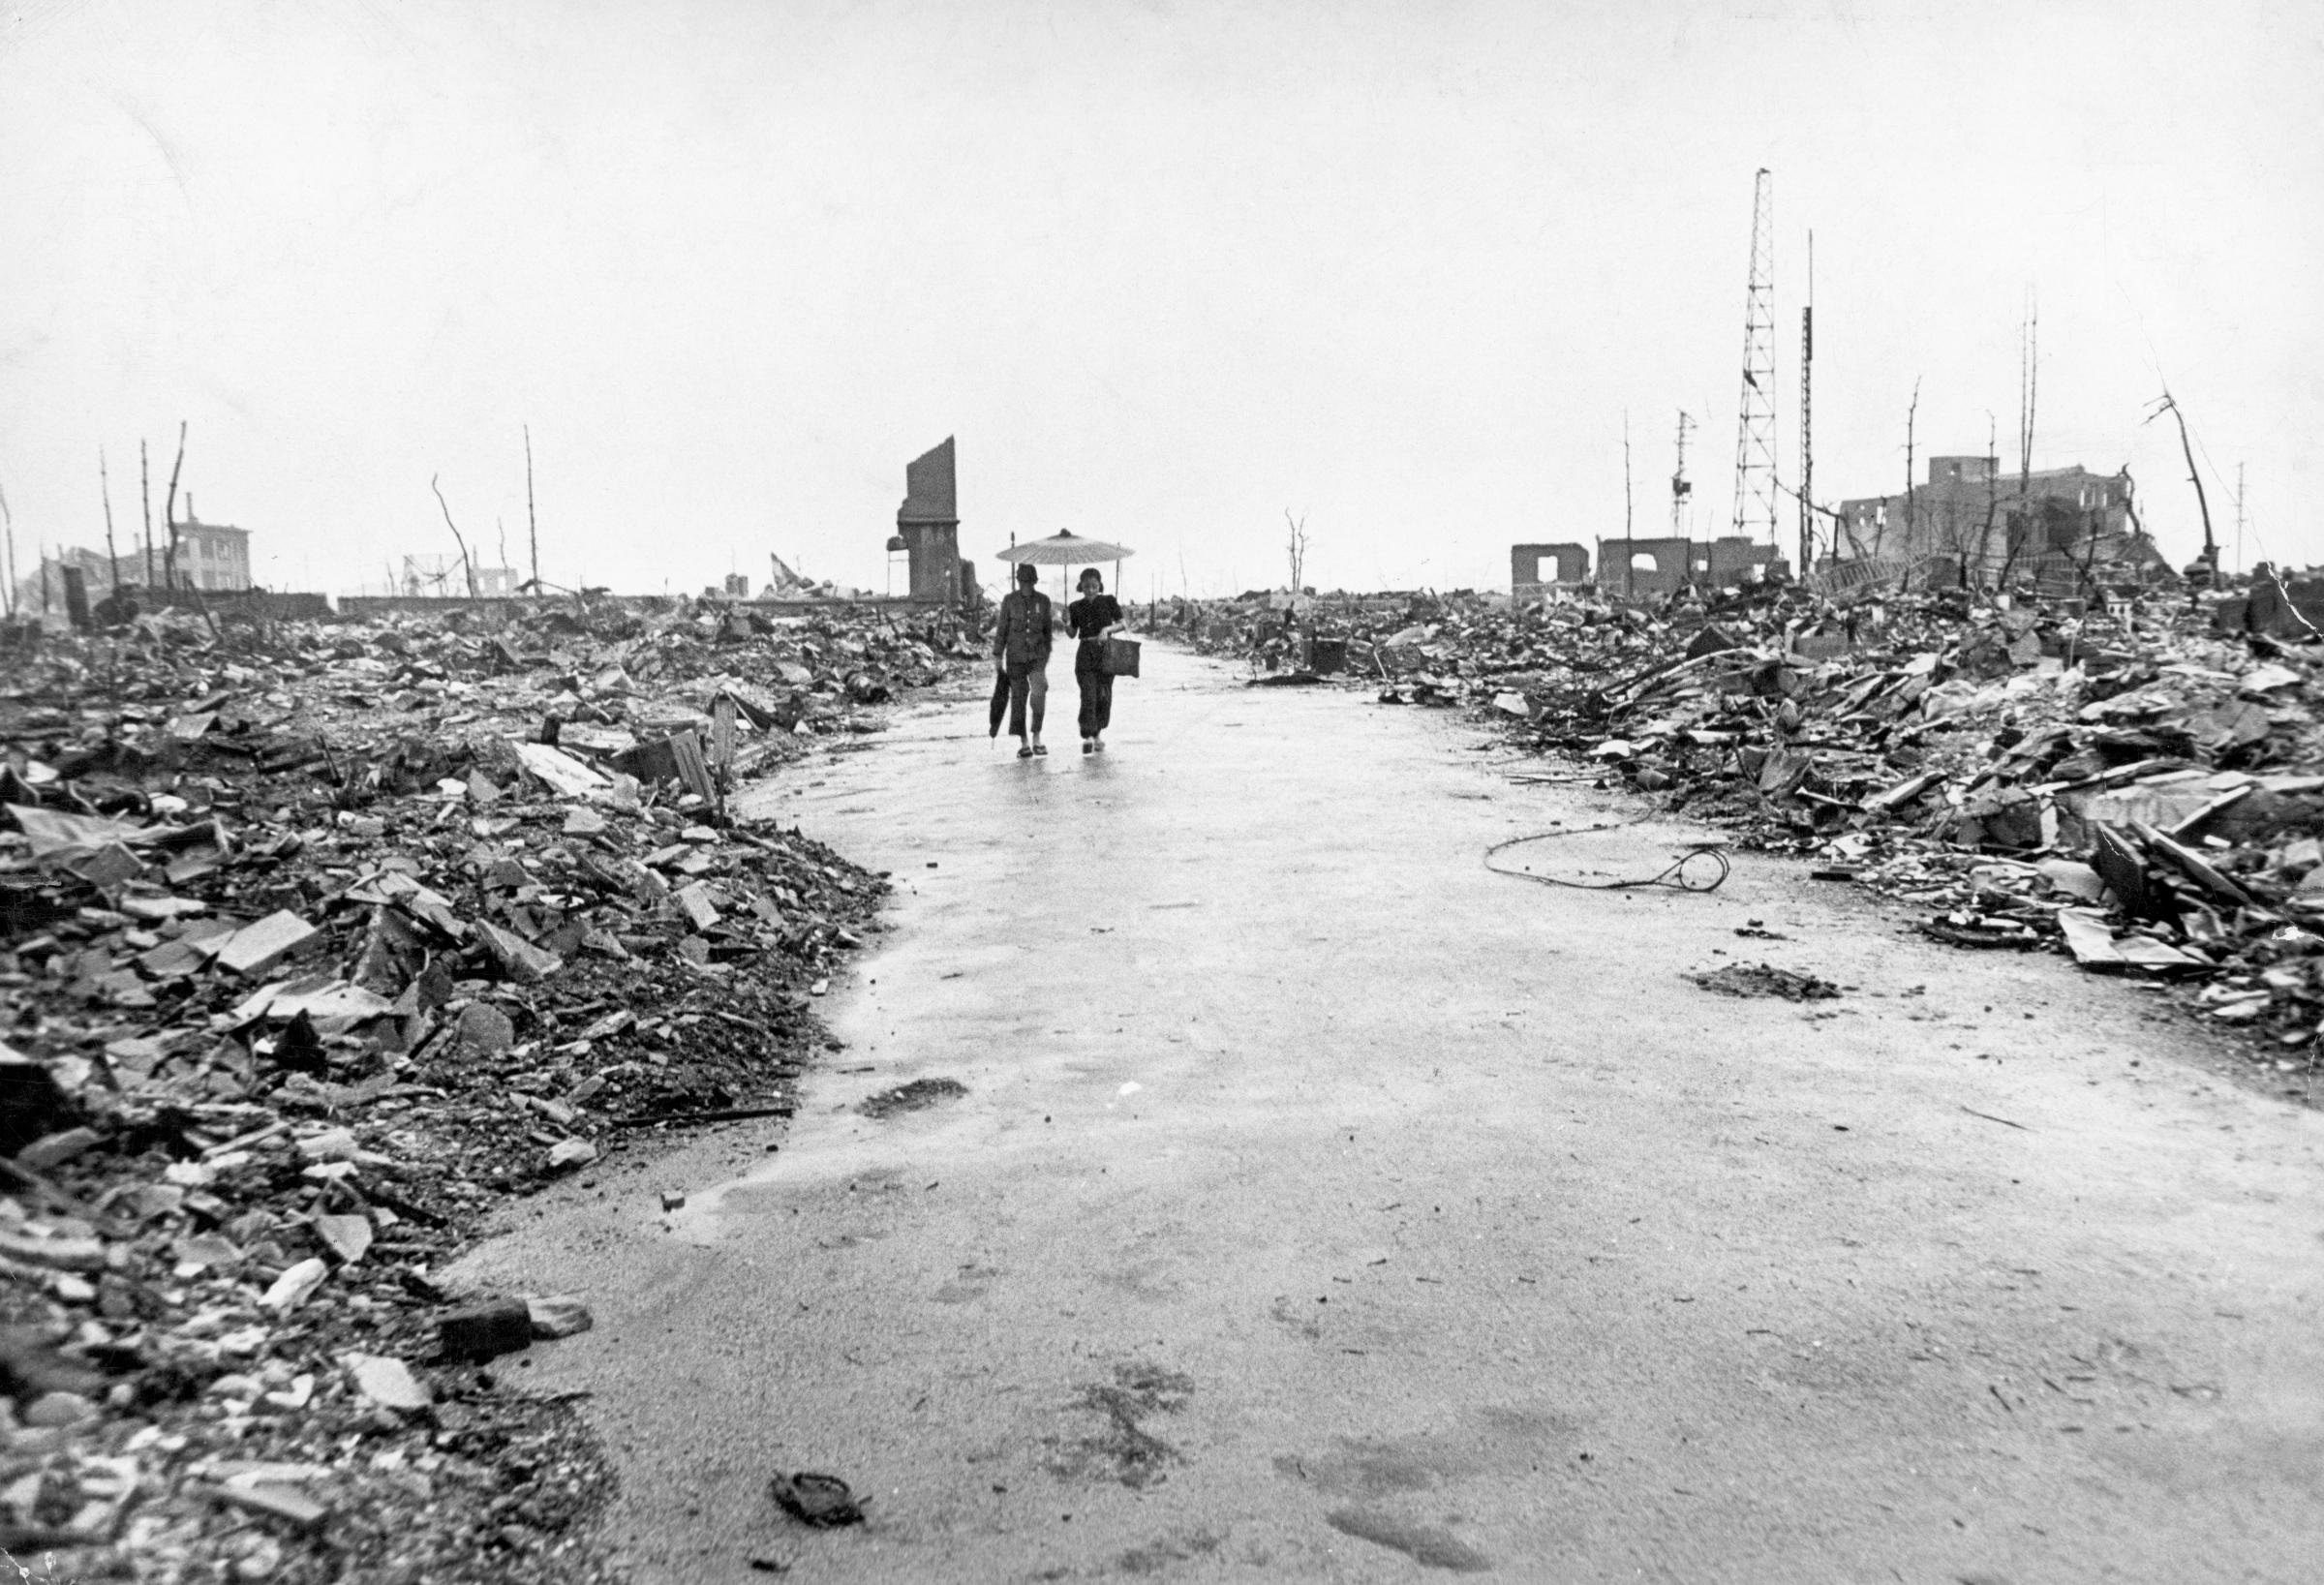 Hiroshima in ruins following the atomic